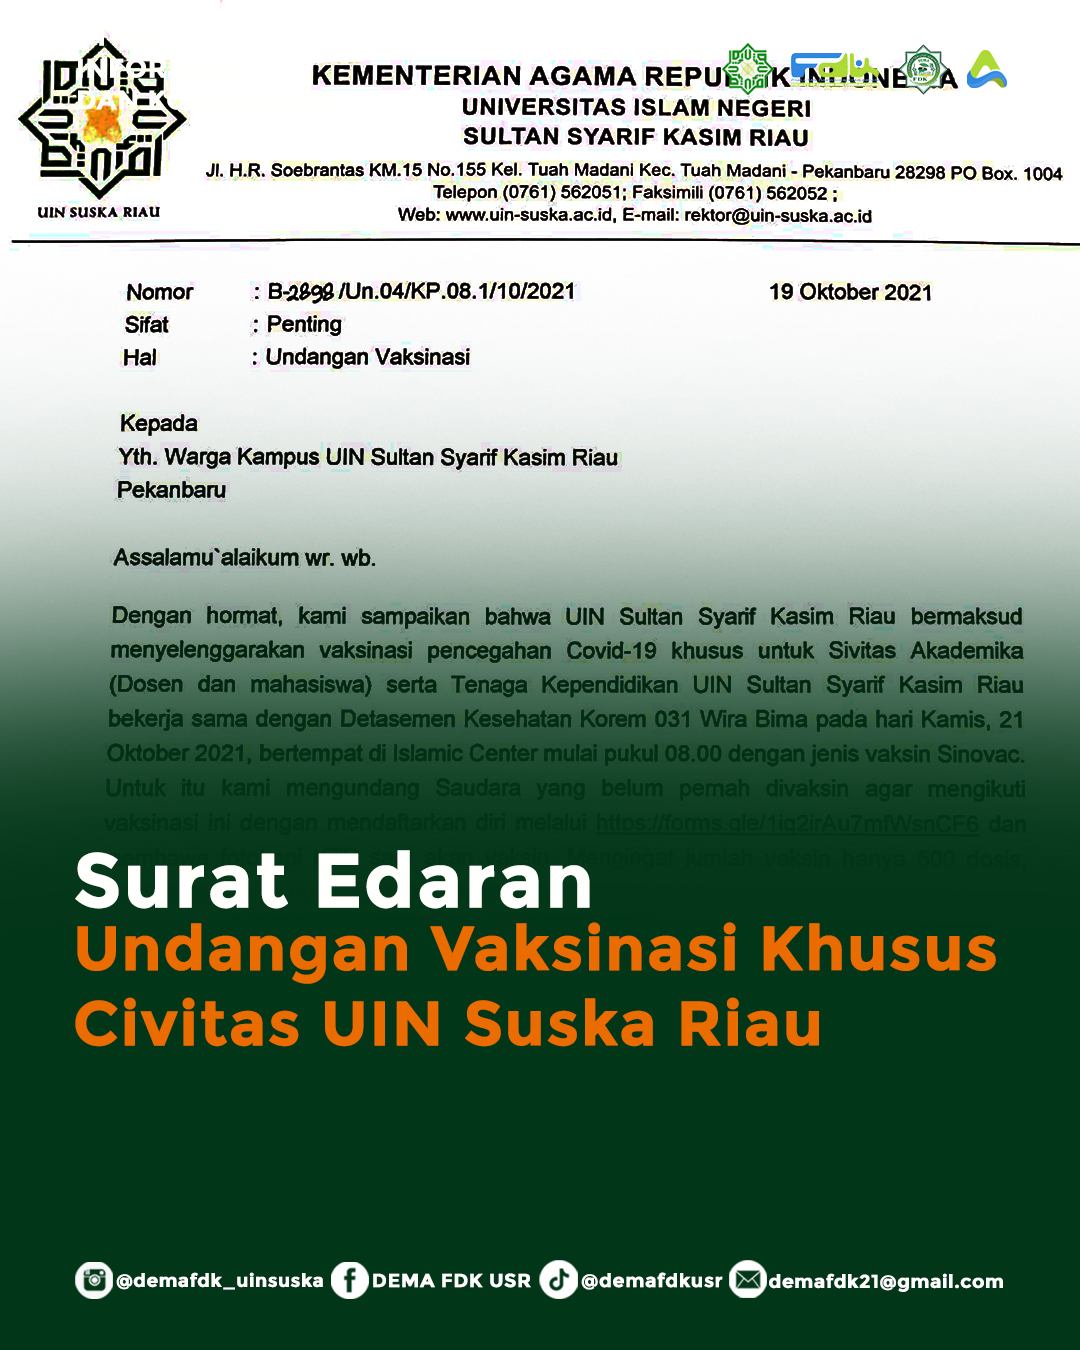 Surat Edaran Undangan Vaksinasi Khusus Civitas UIN Suska Riau